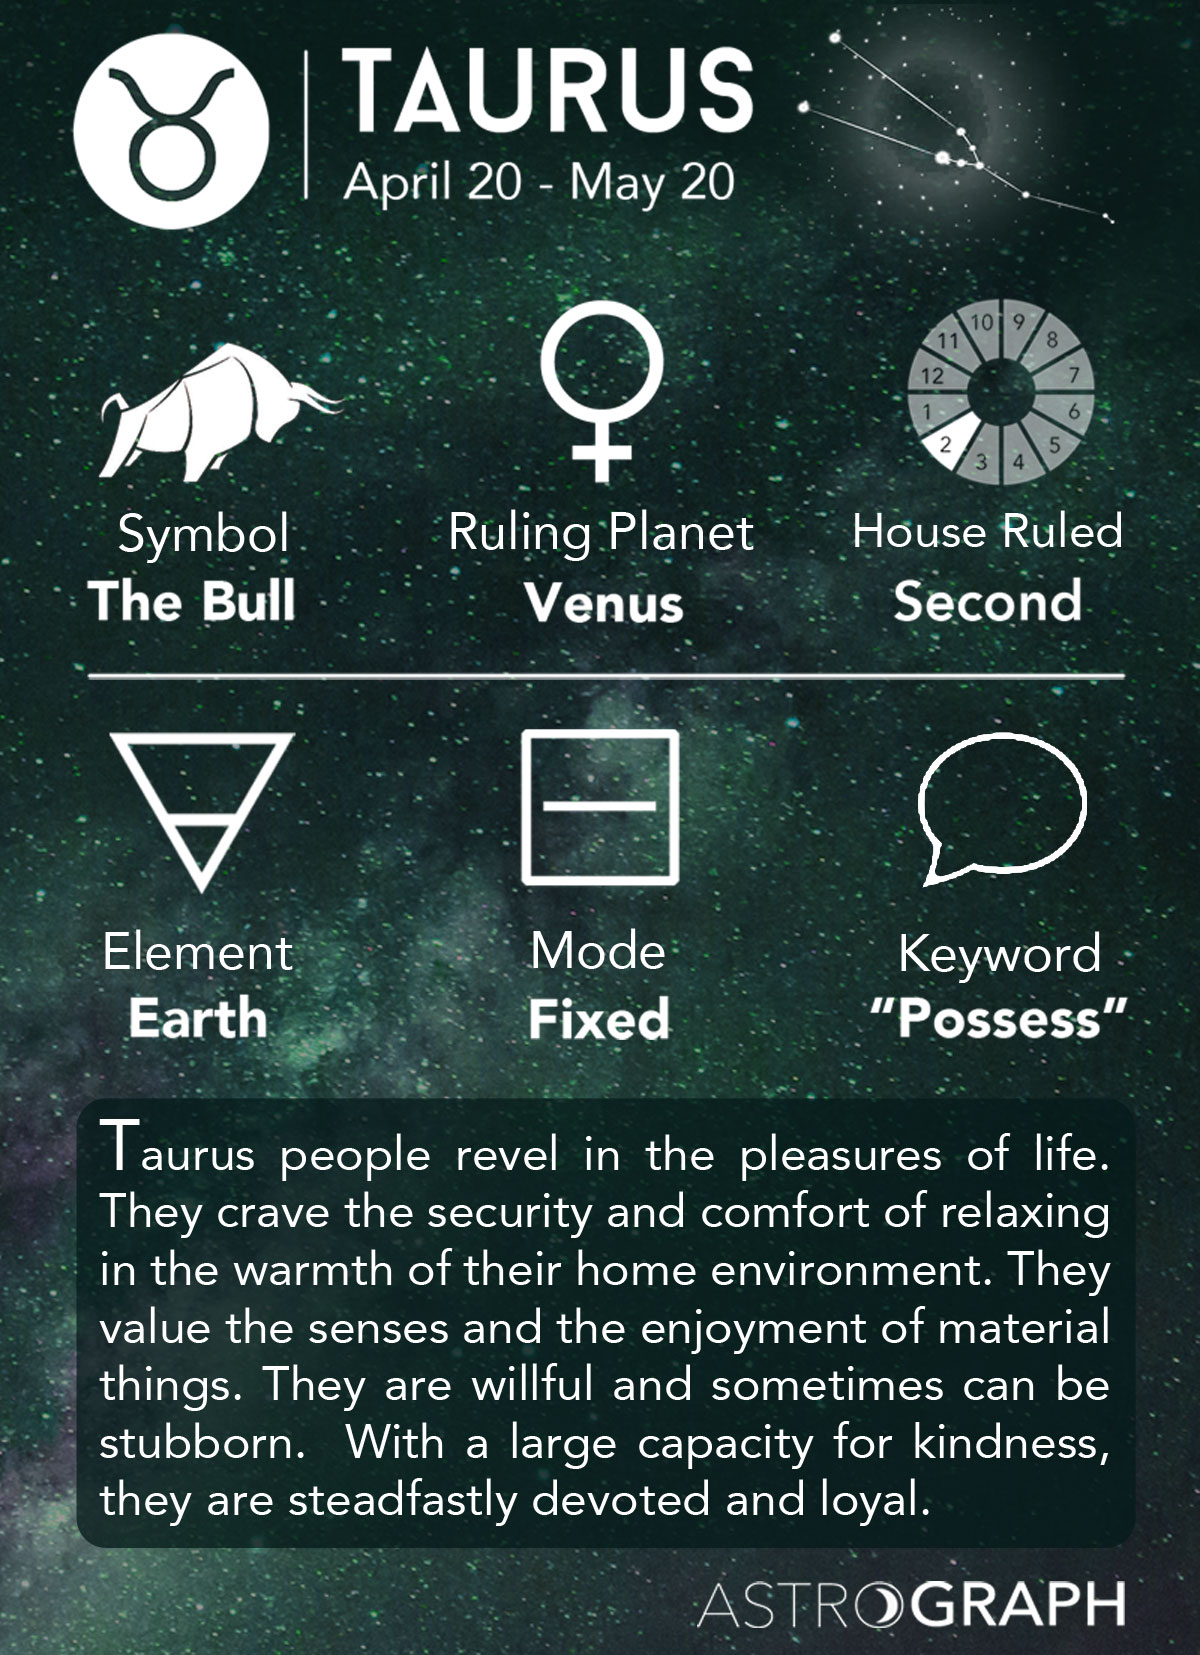 do taurus believe in astrology